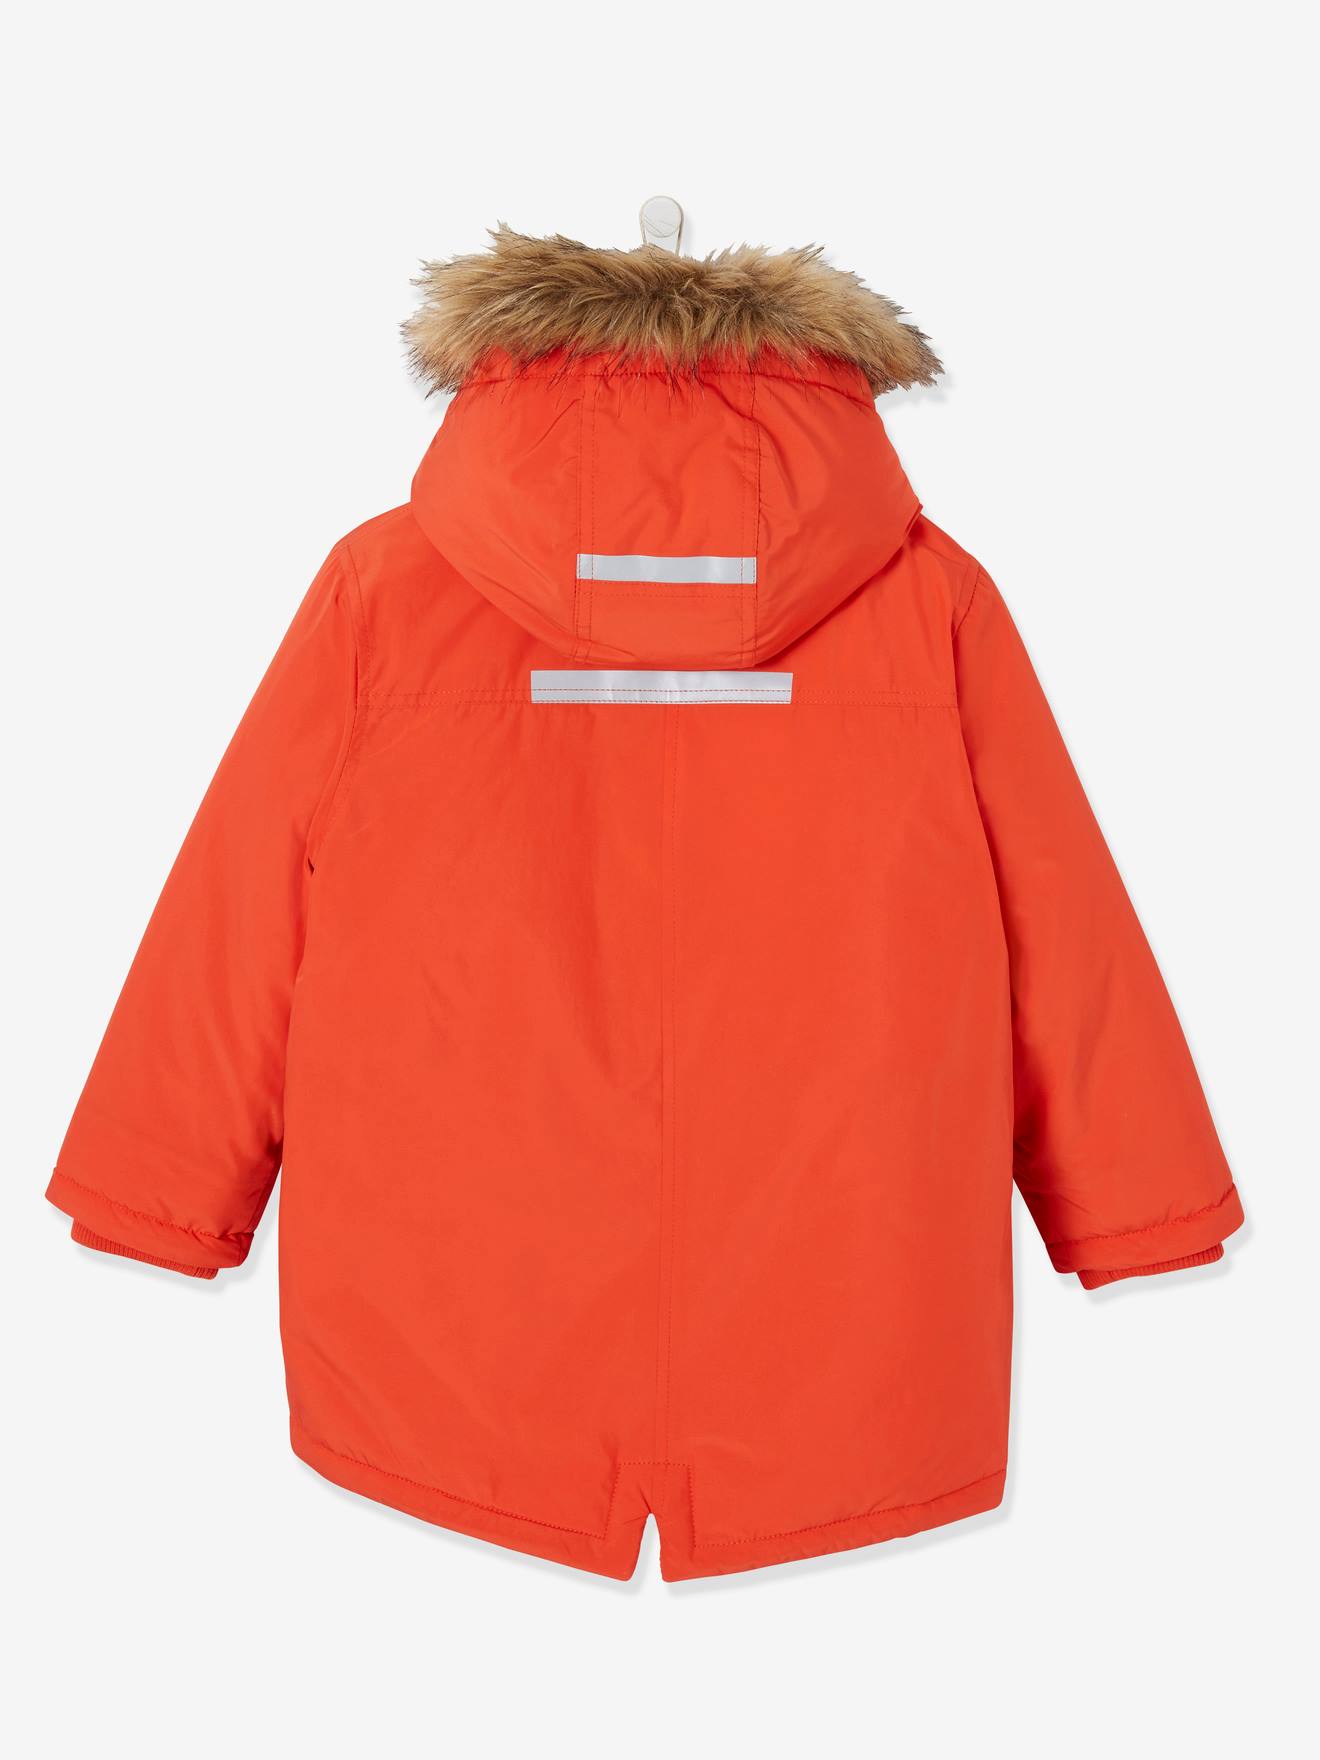 Parka técnica con capucha para niño naranja fuerte liso motivo - Vertbaudet